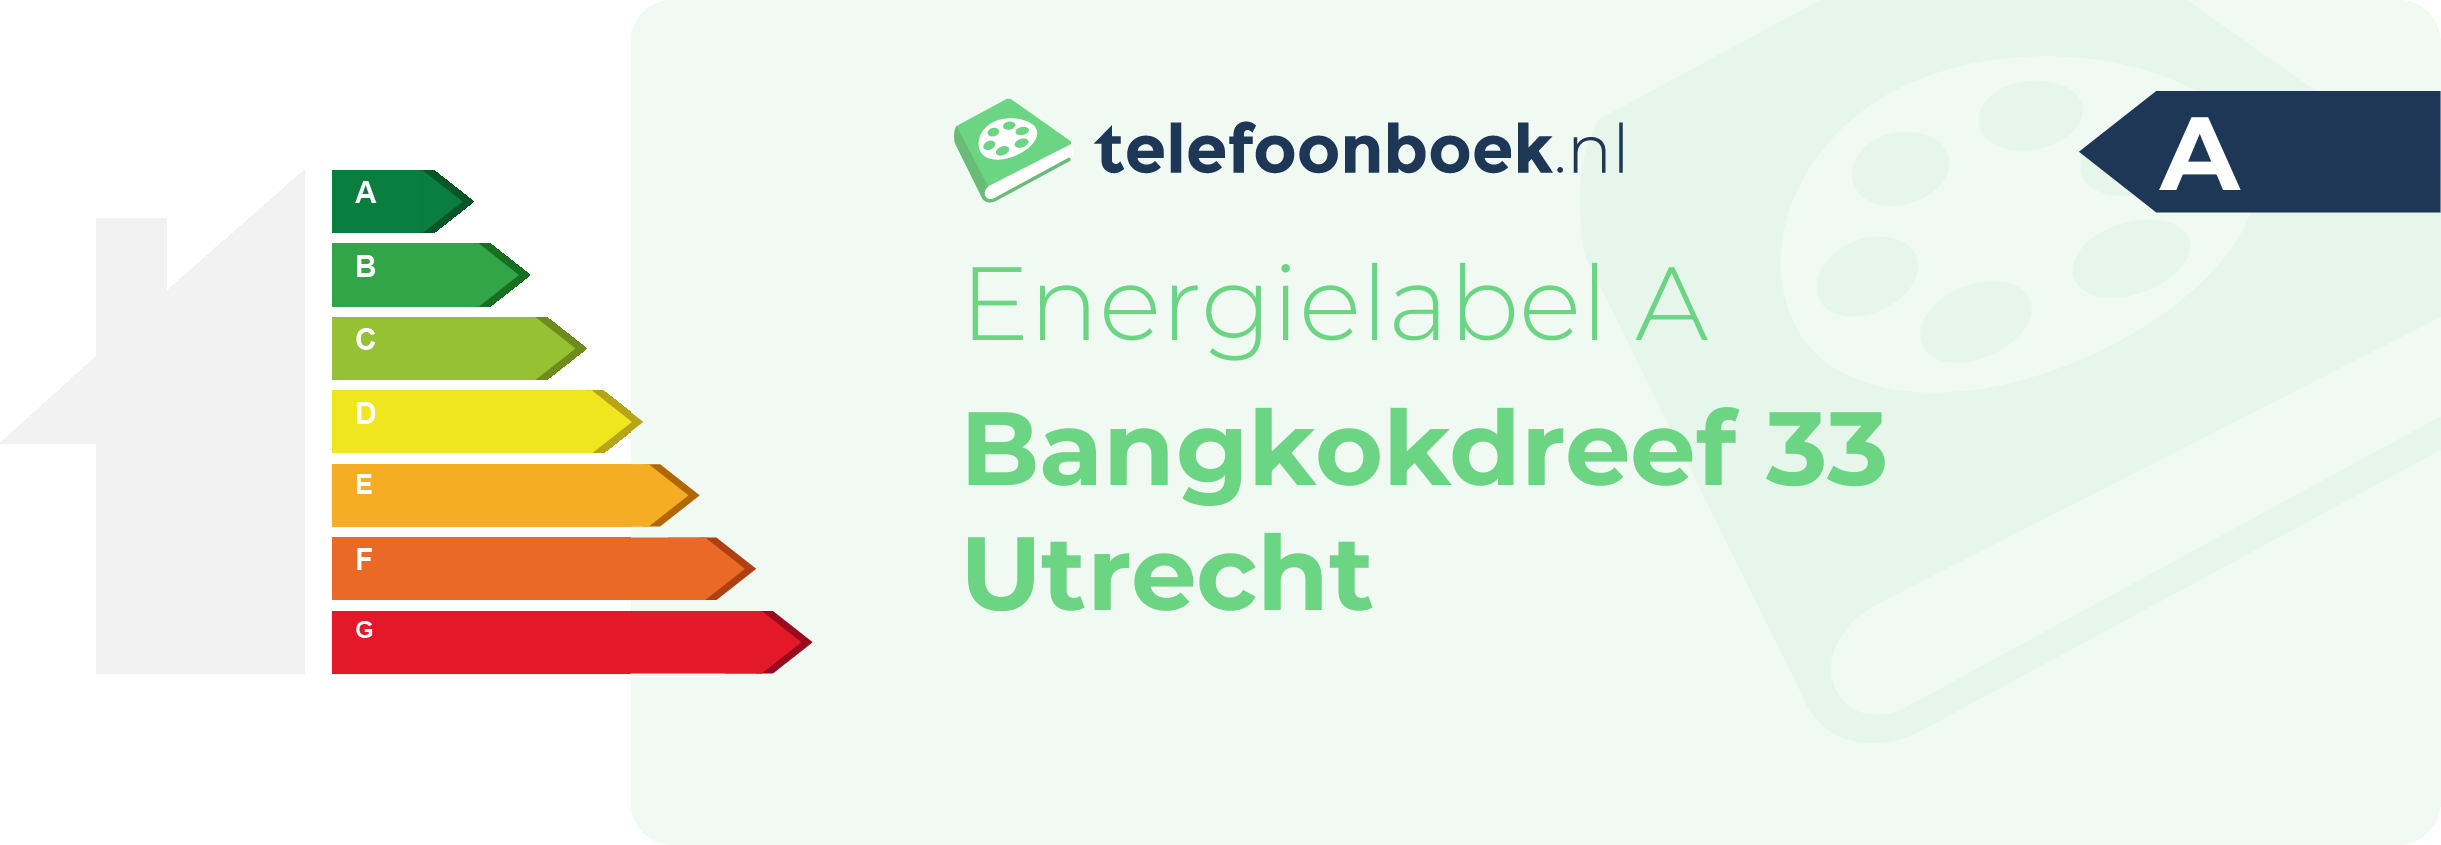 Energielabel Bangkokdreef 33 Utrecht